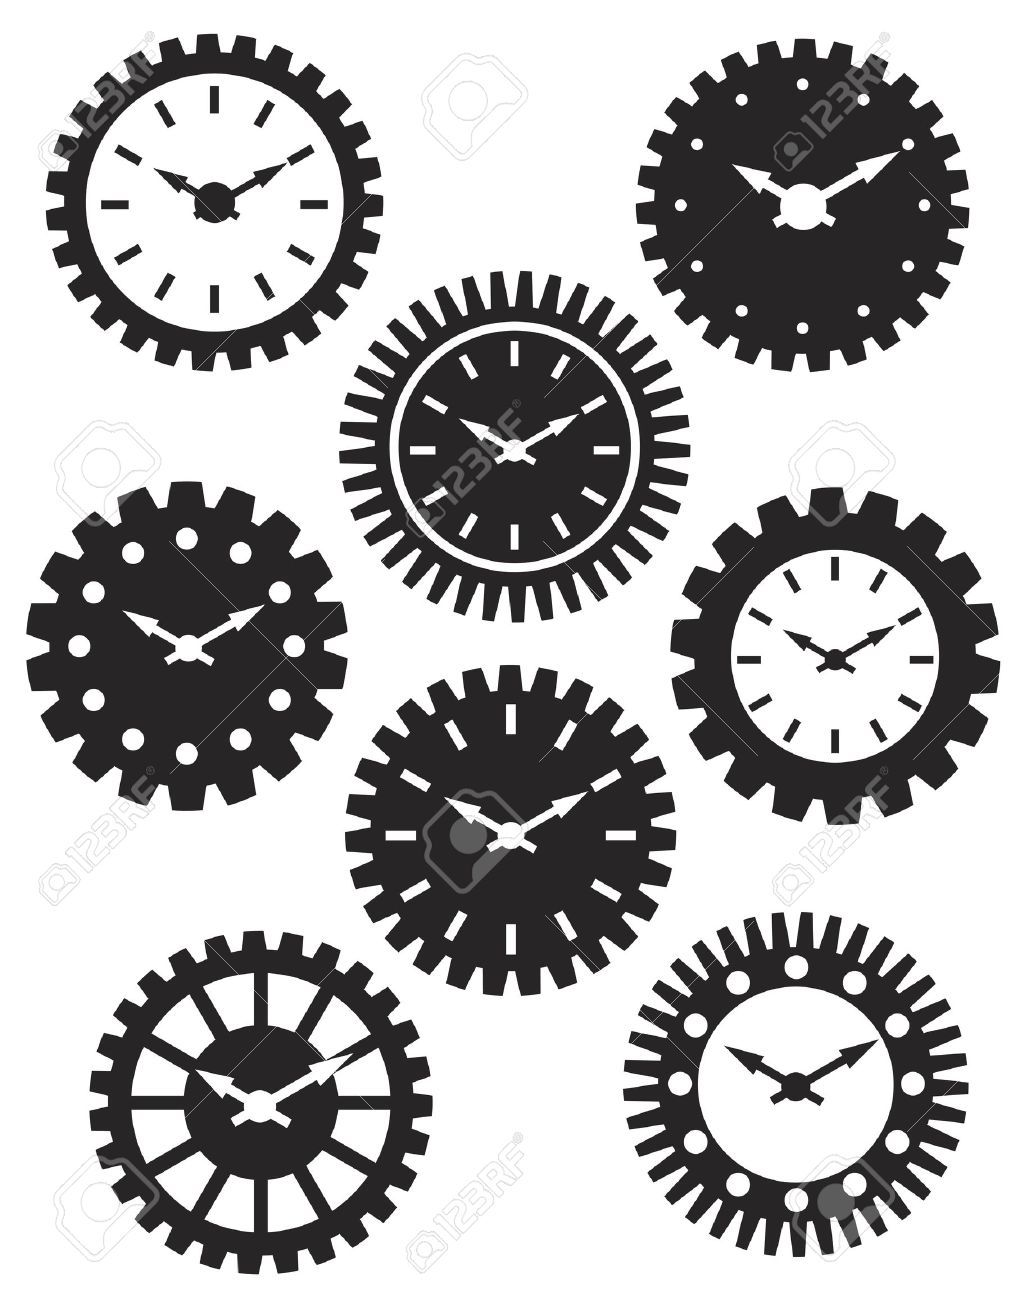 Pin gears clocks.